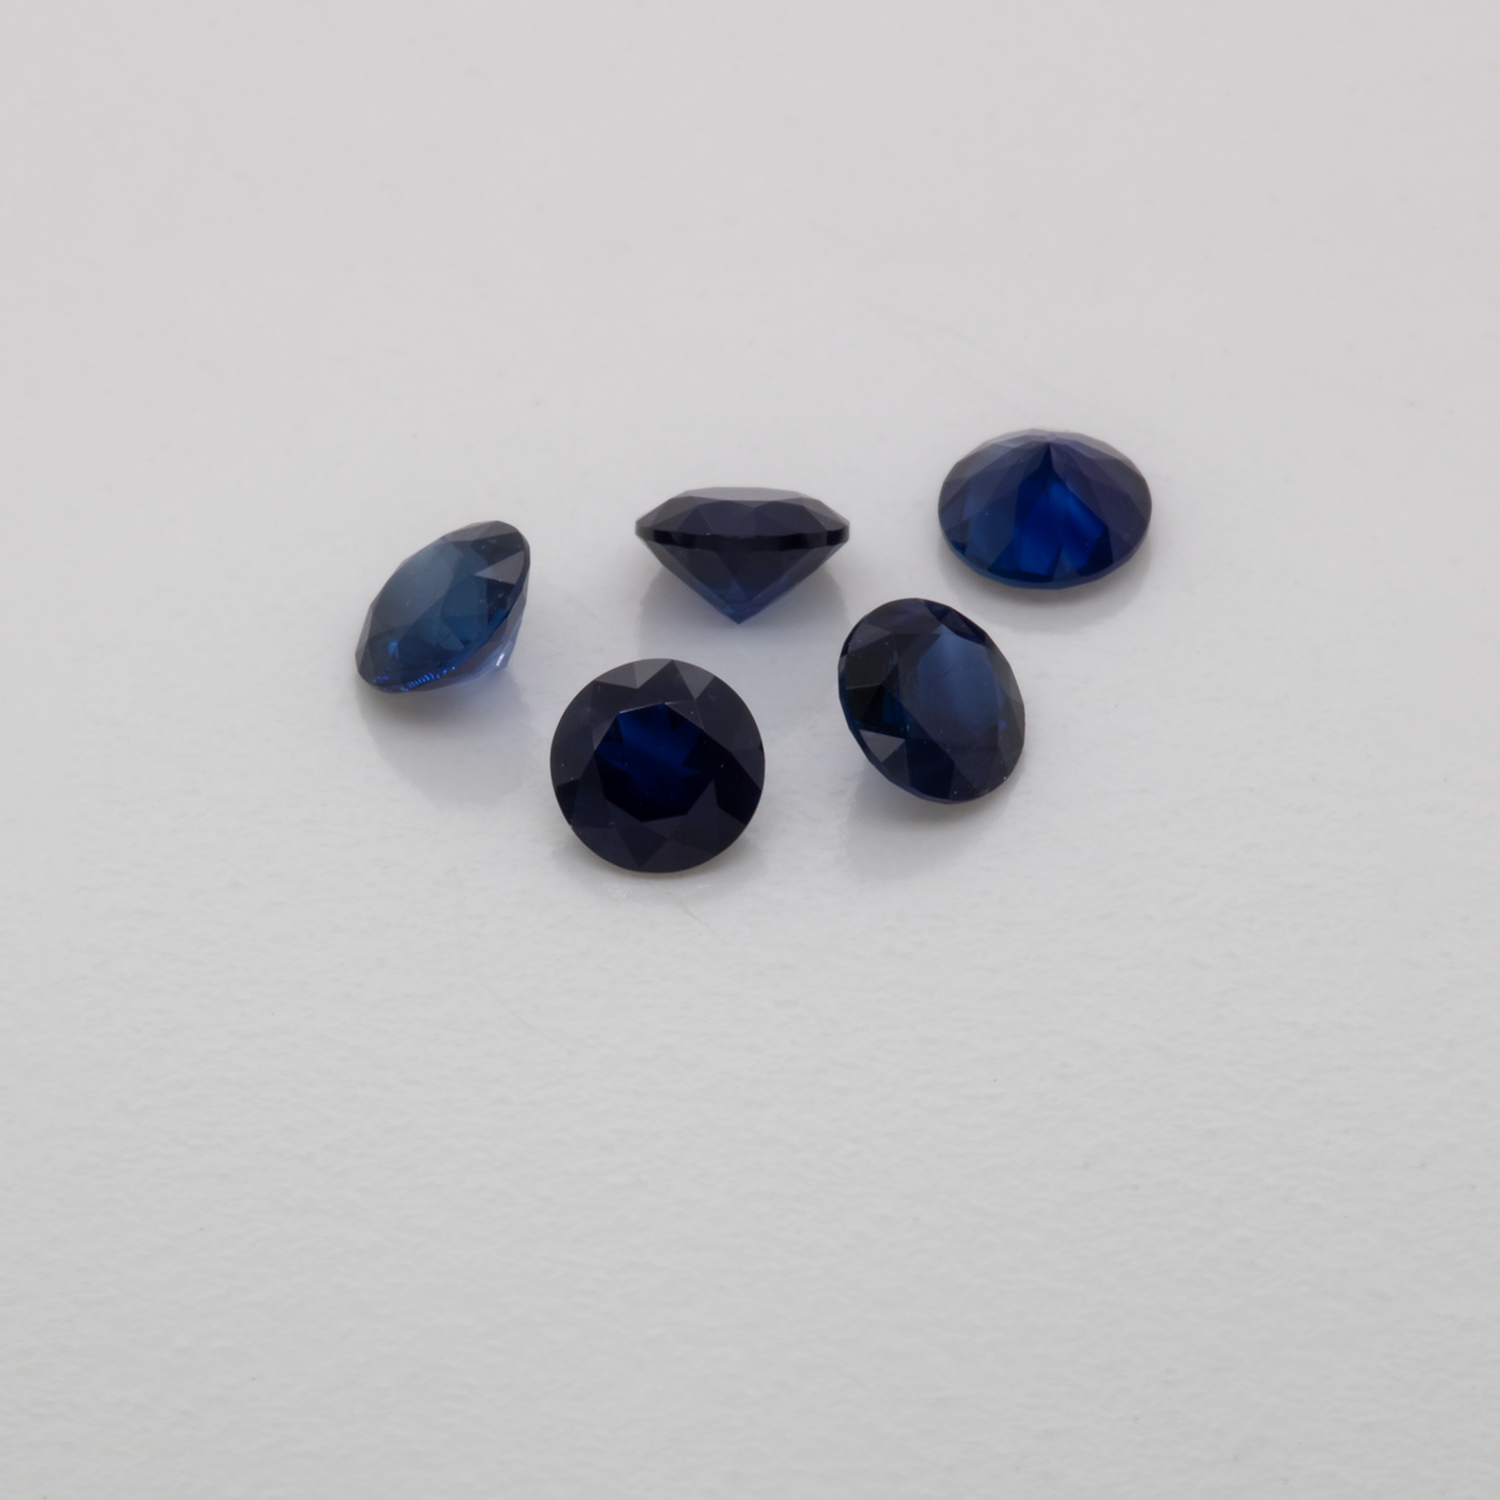 Saphir - blau, rund, 3x3 mm, 0.11-0.14 cts, Nr. XSR11232